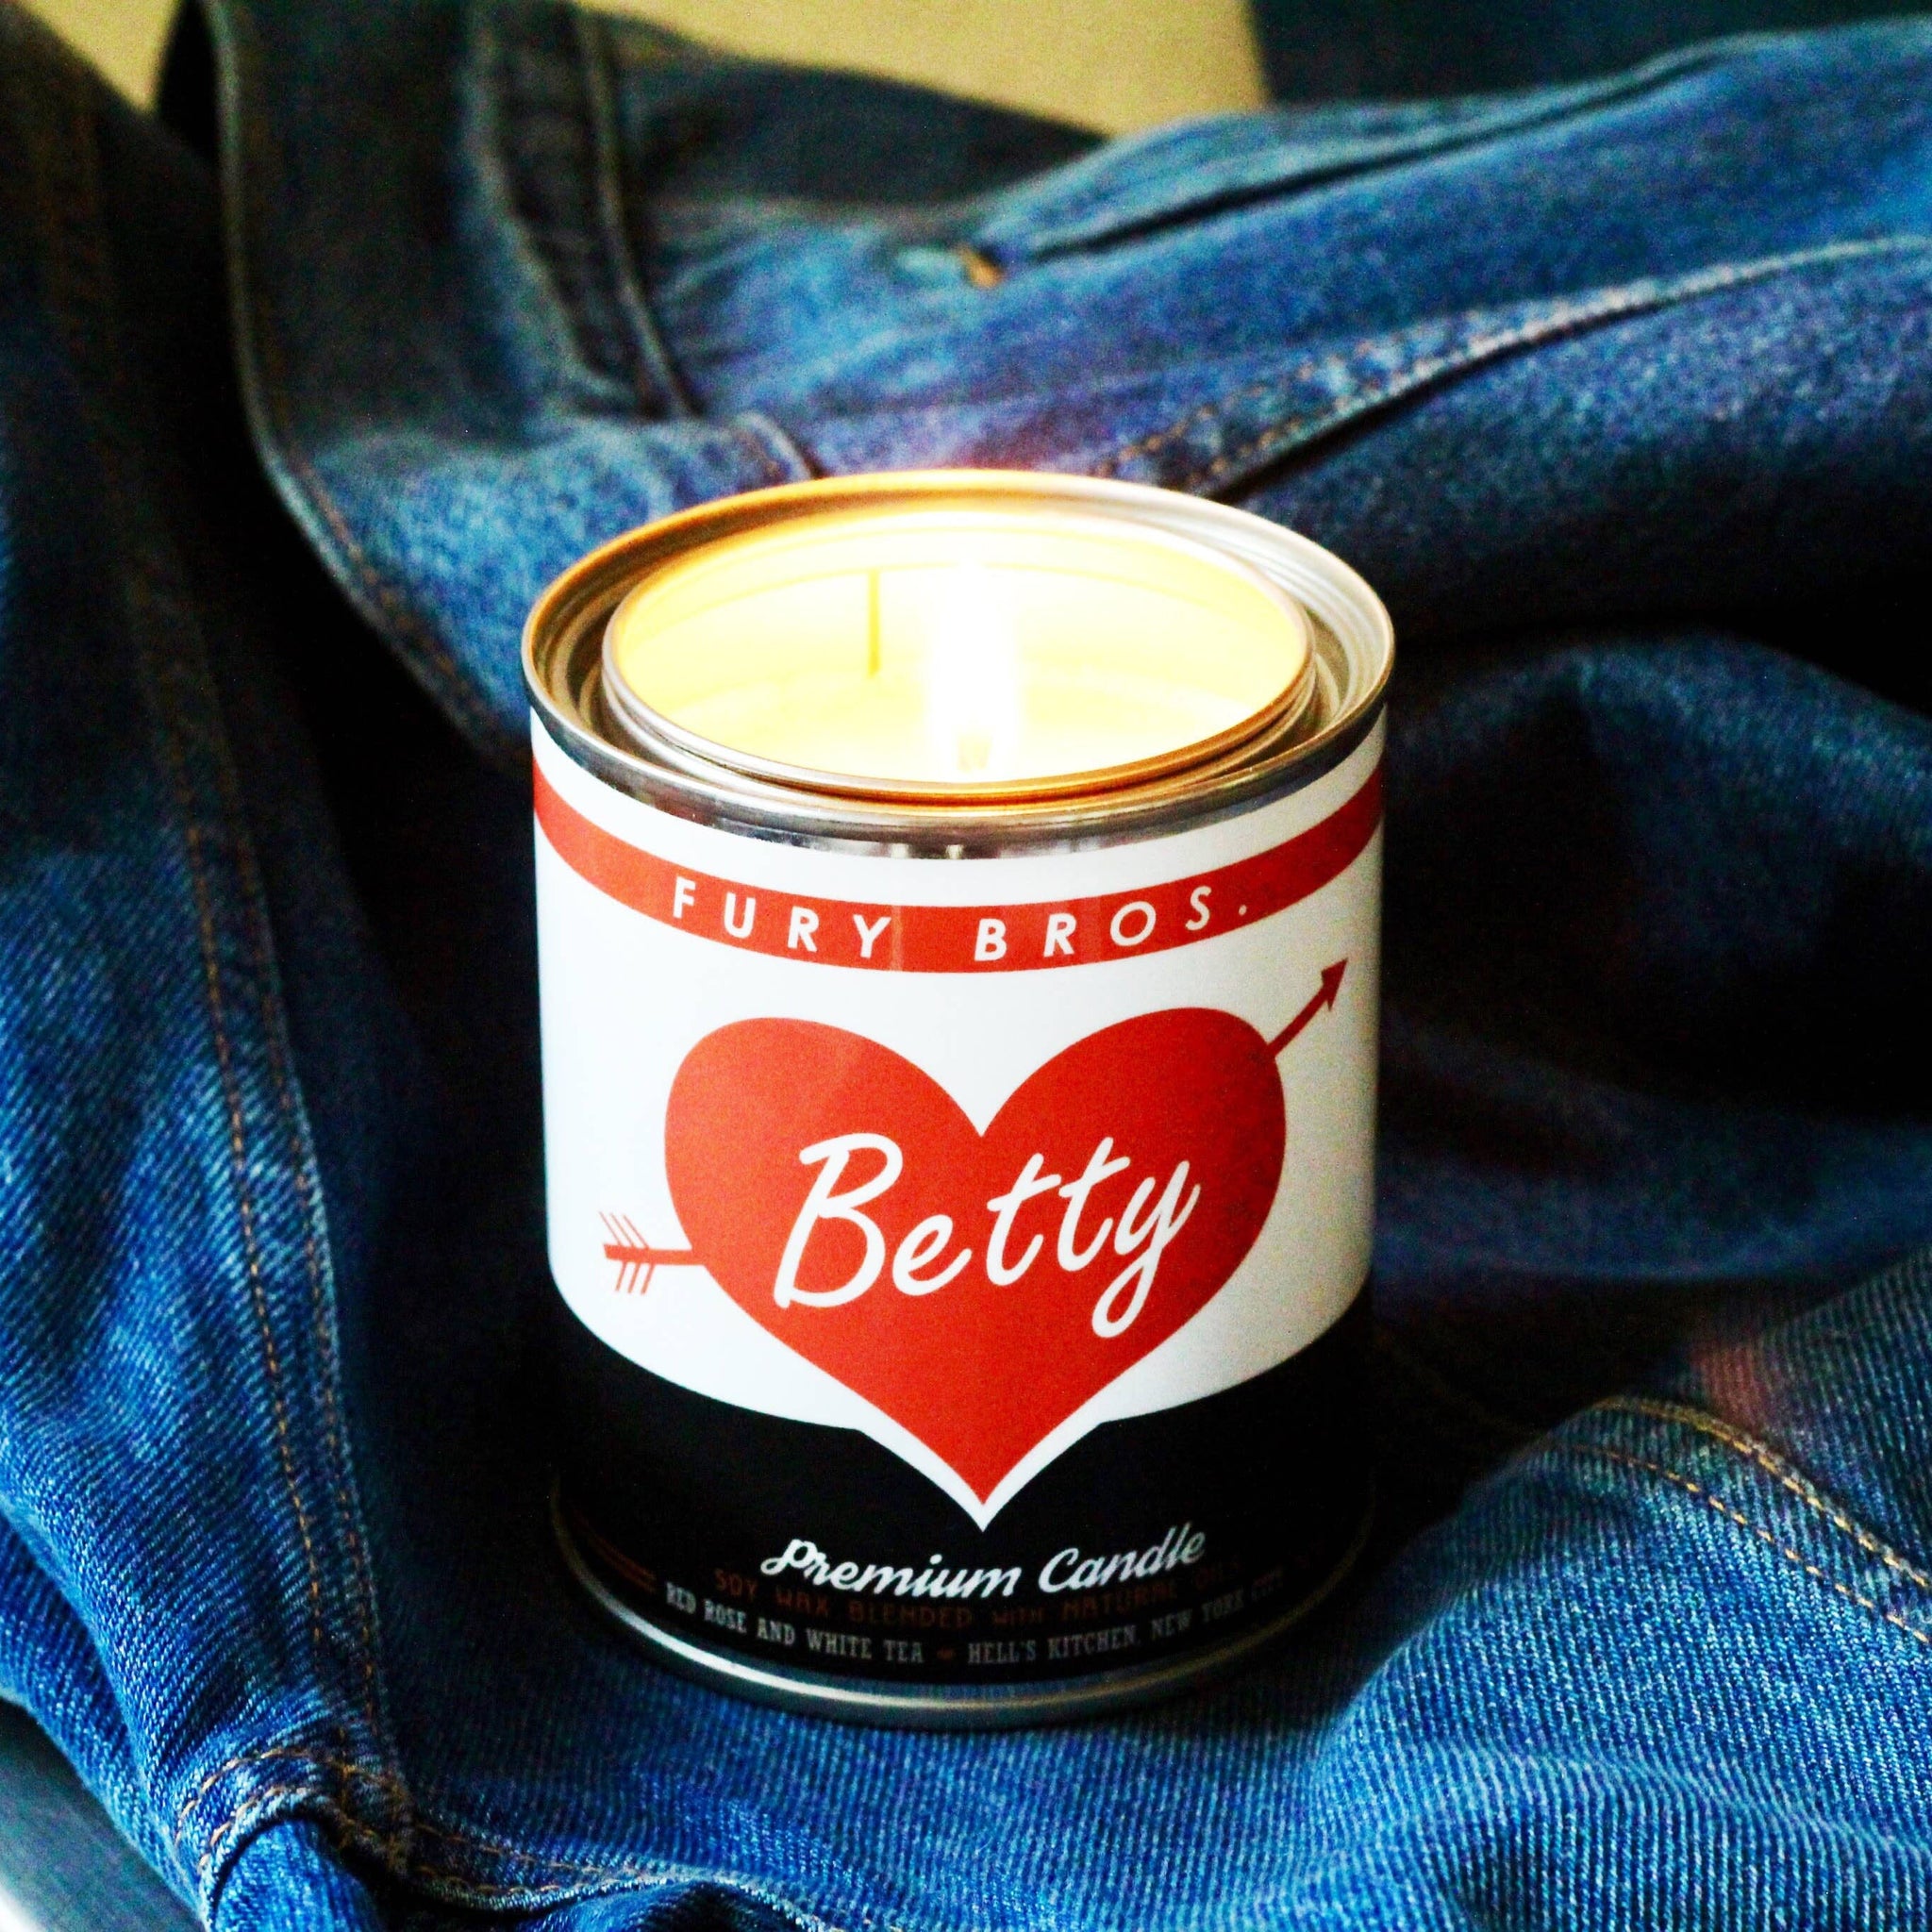 Fury Bros. - Betty